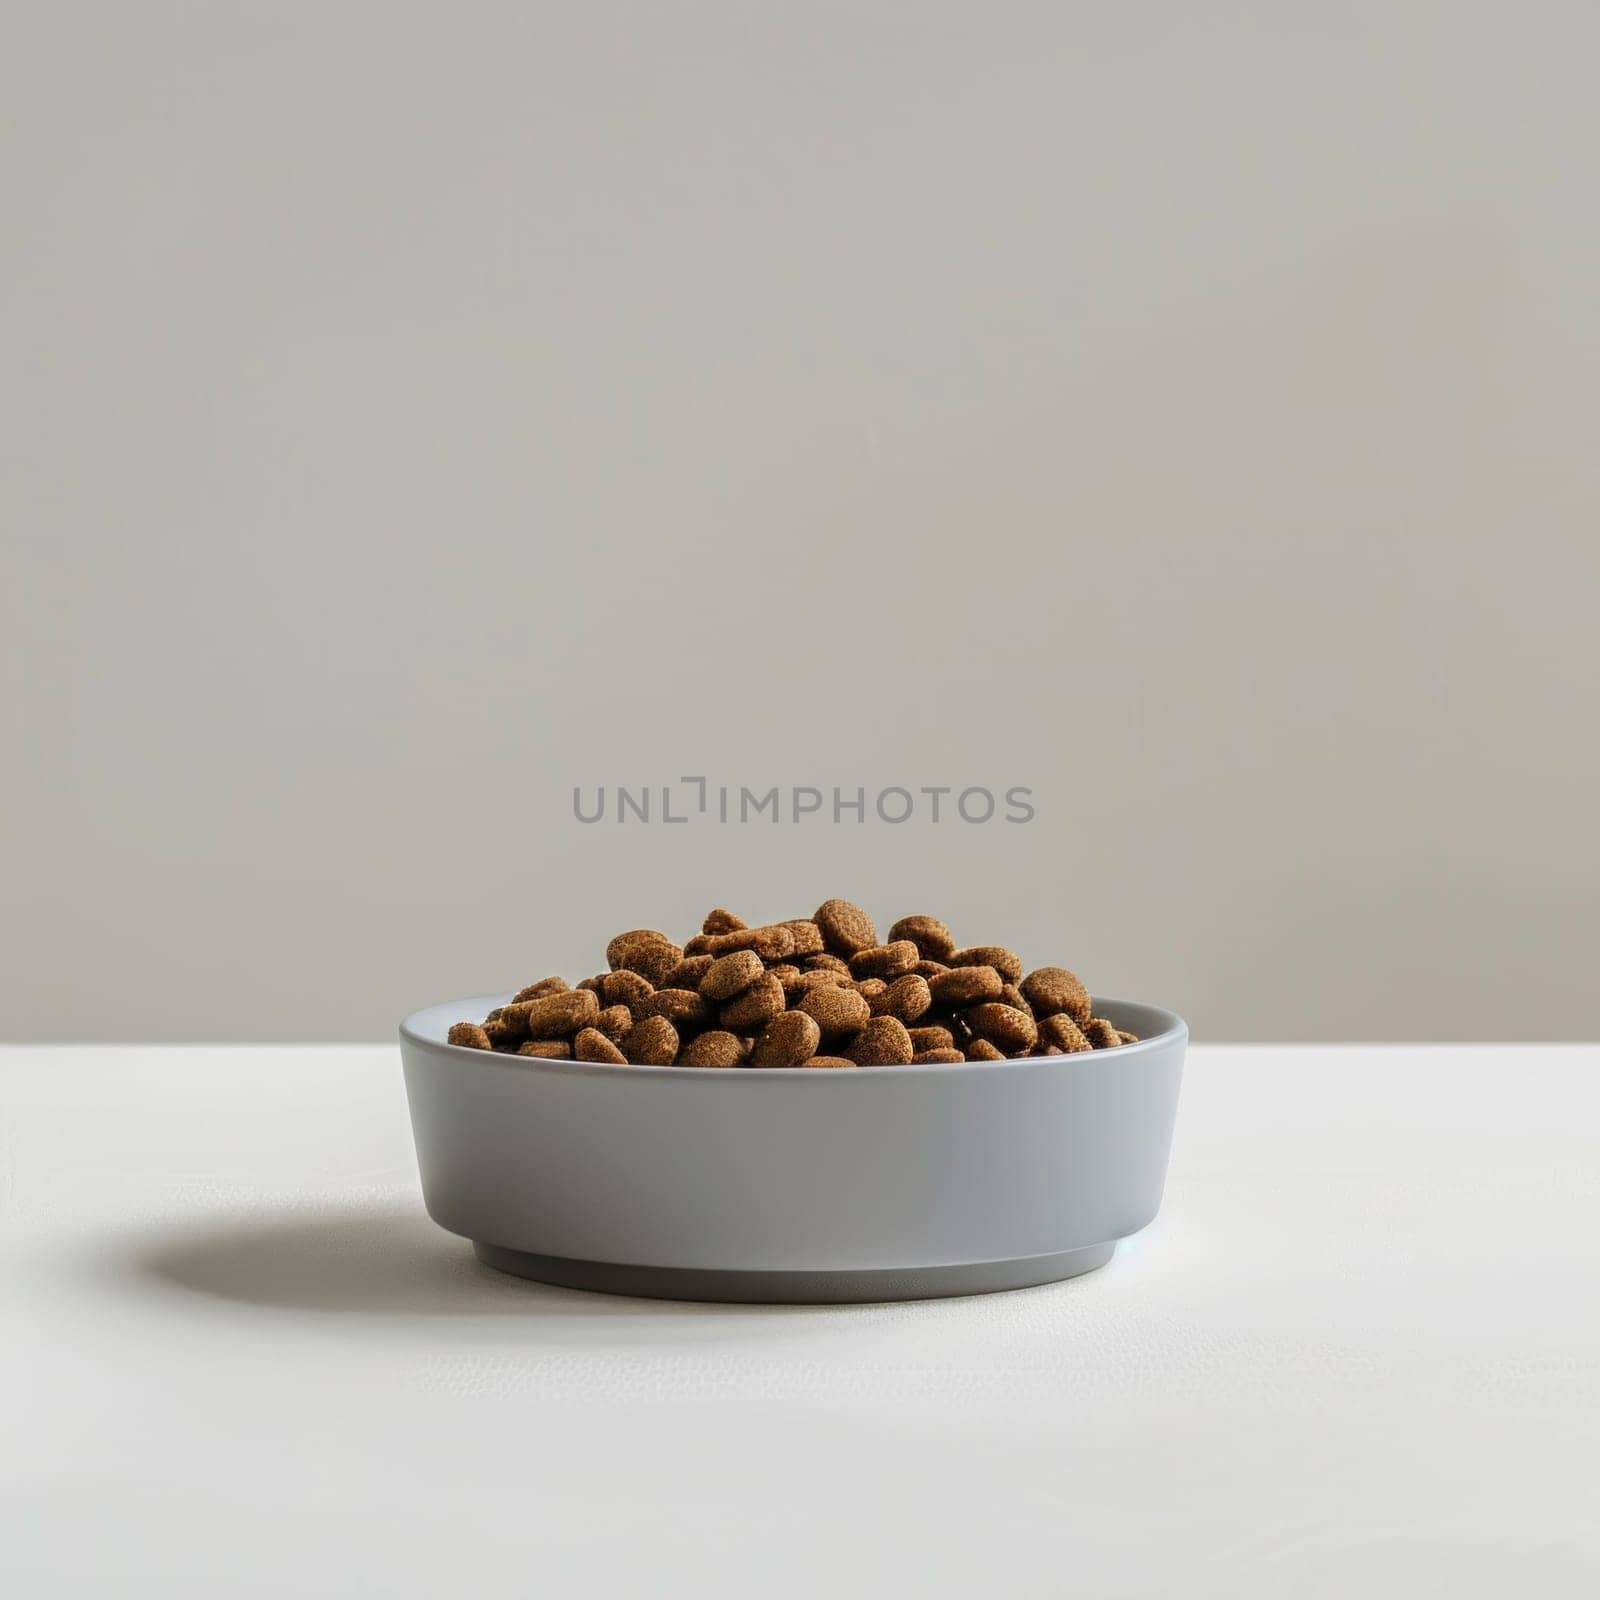 Minimalistic photo of a bowl of dog food on white background.